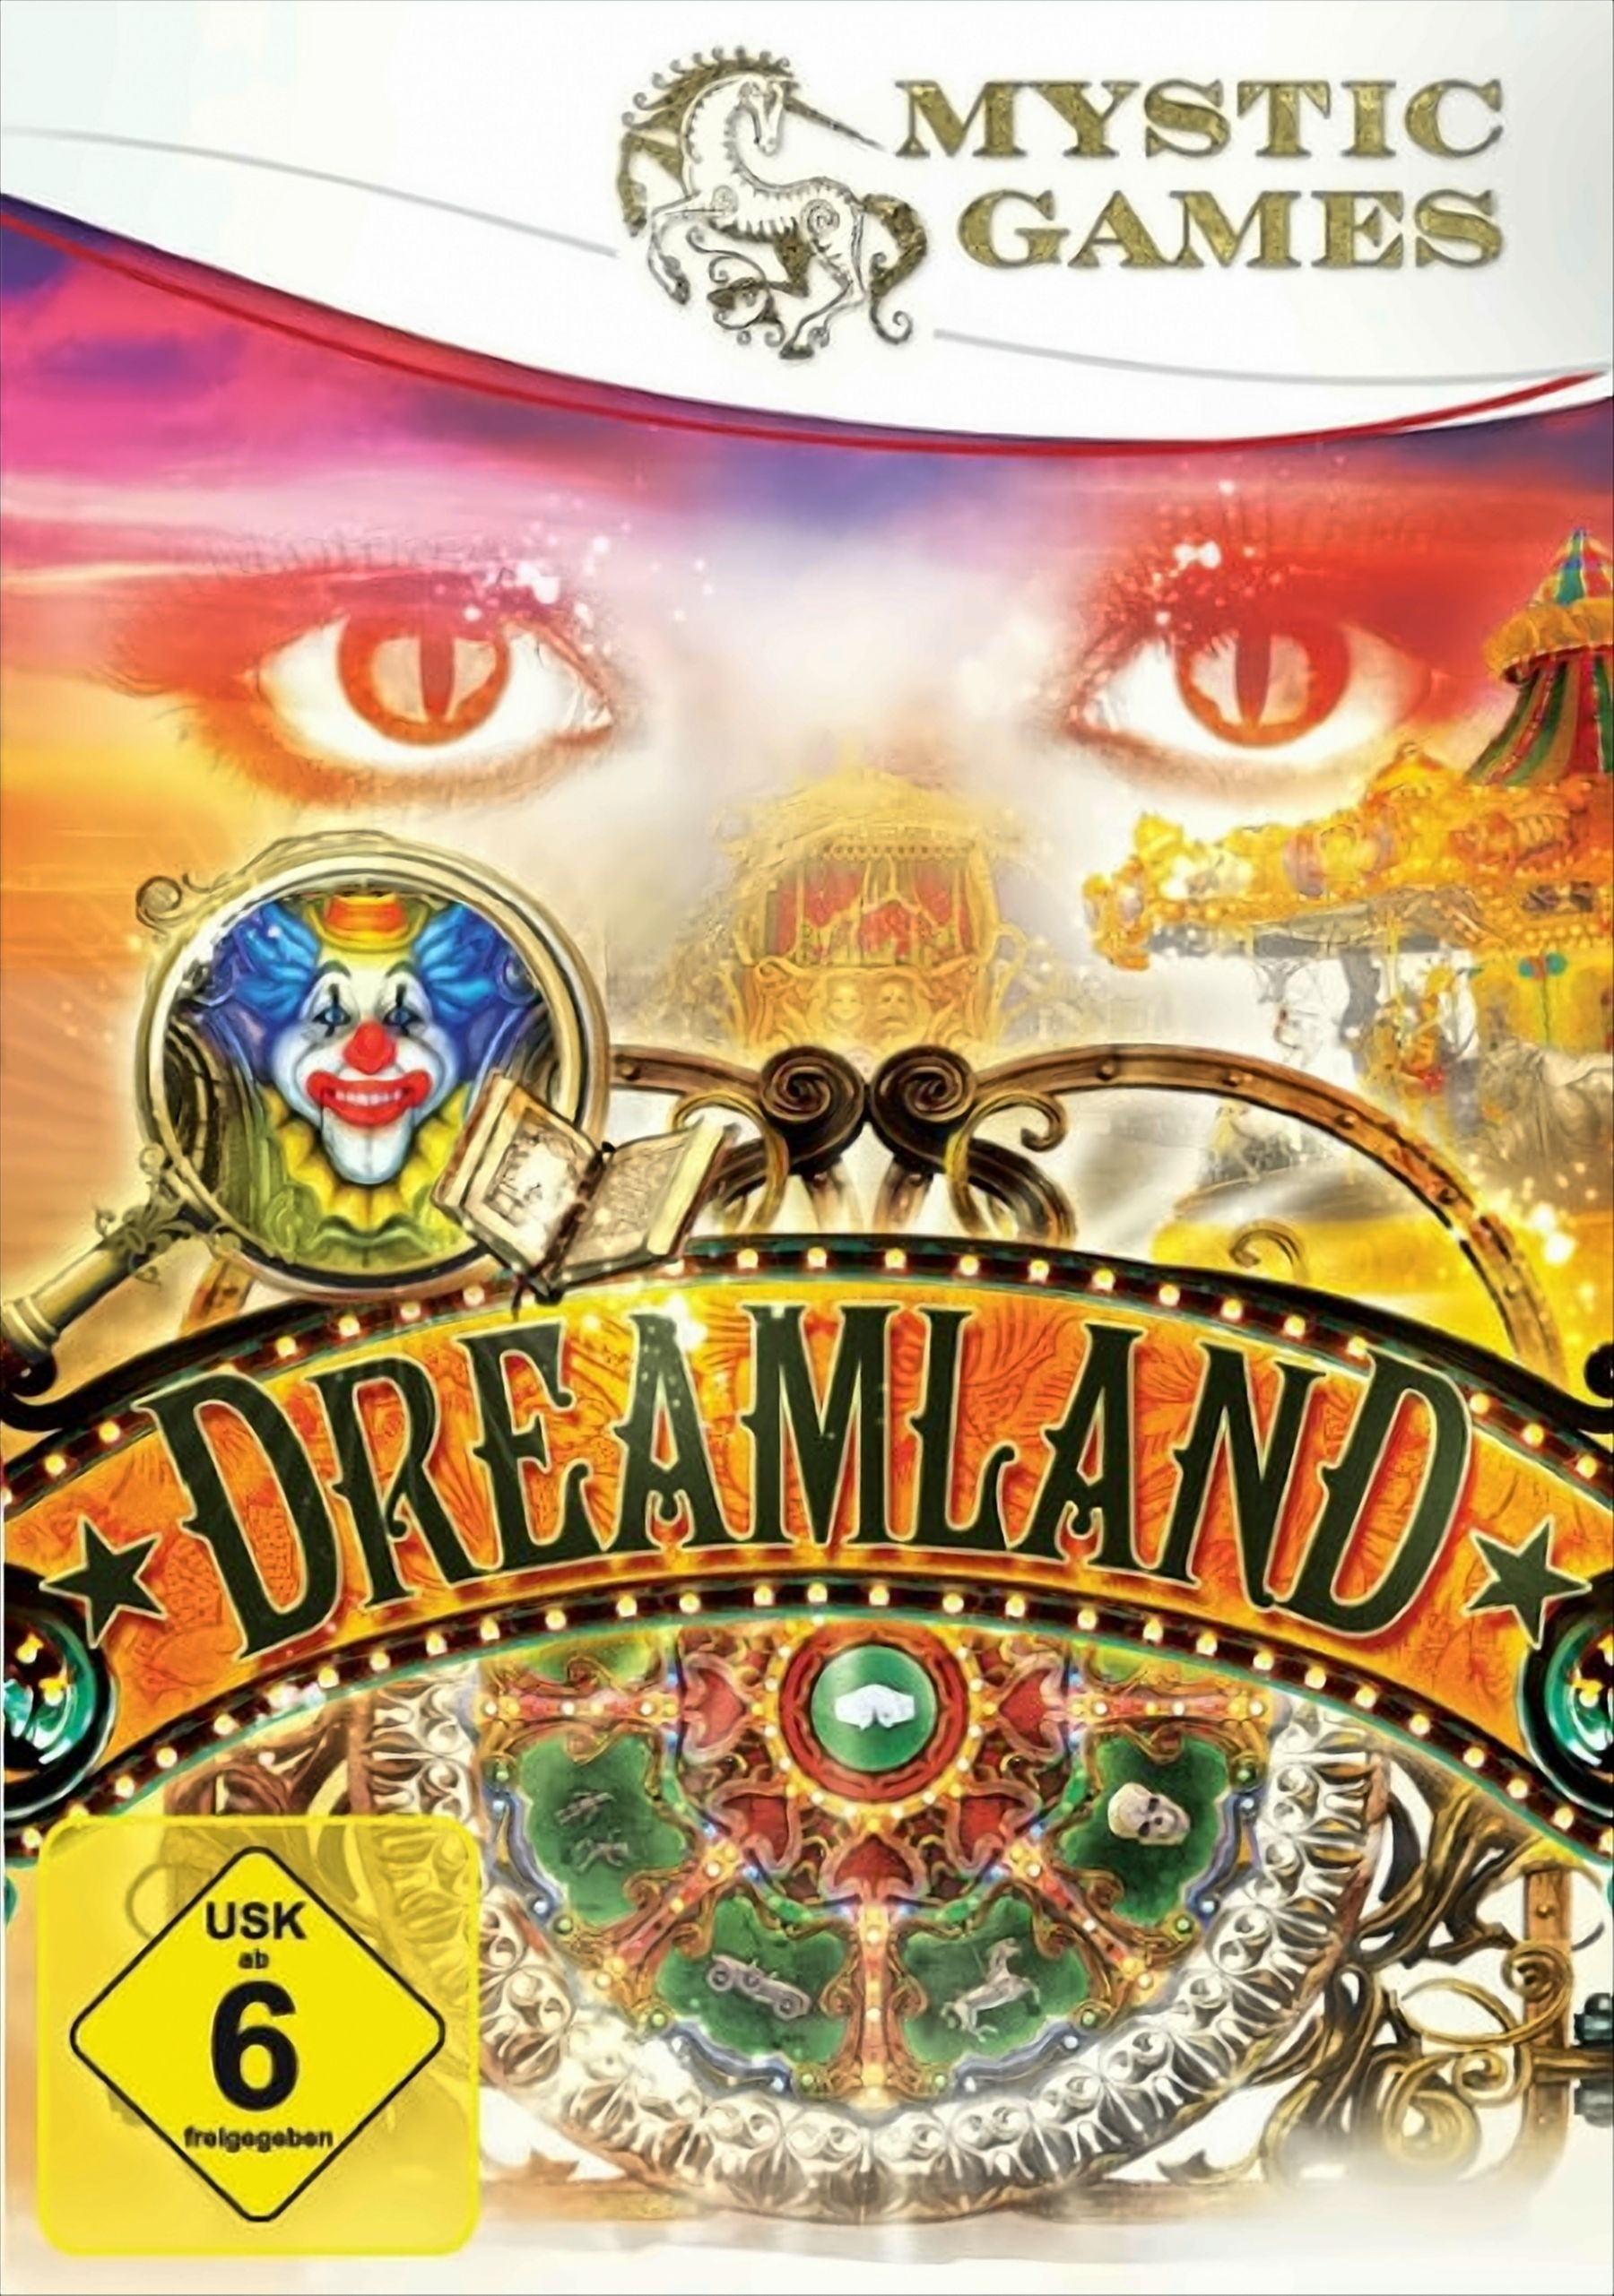 Dreamland - [PC